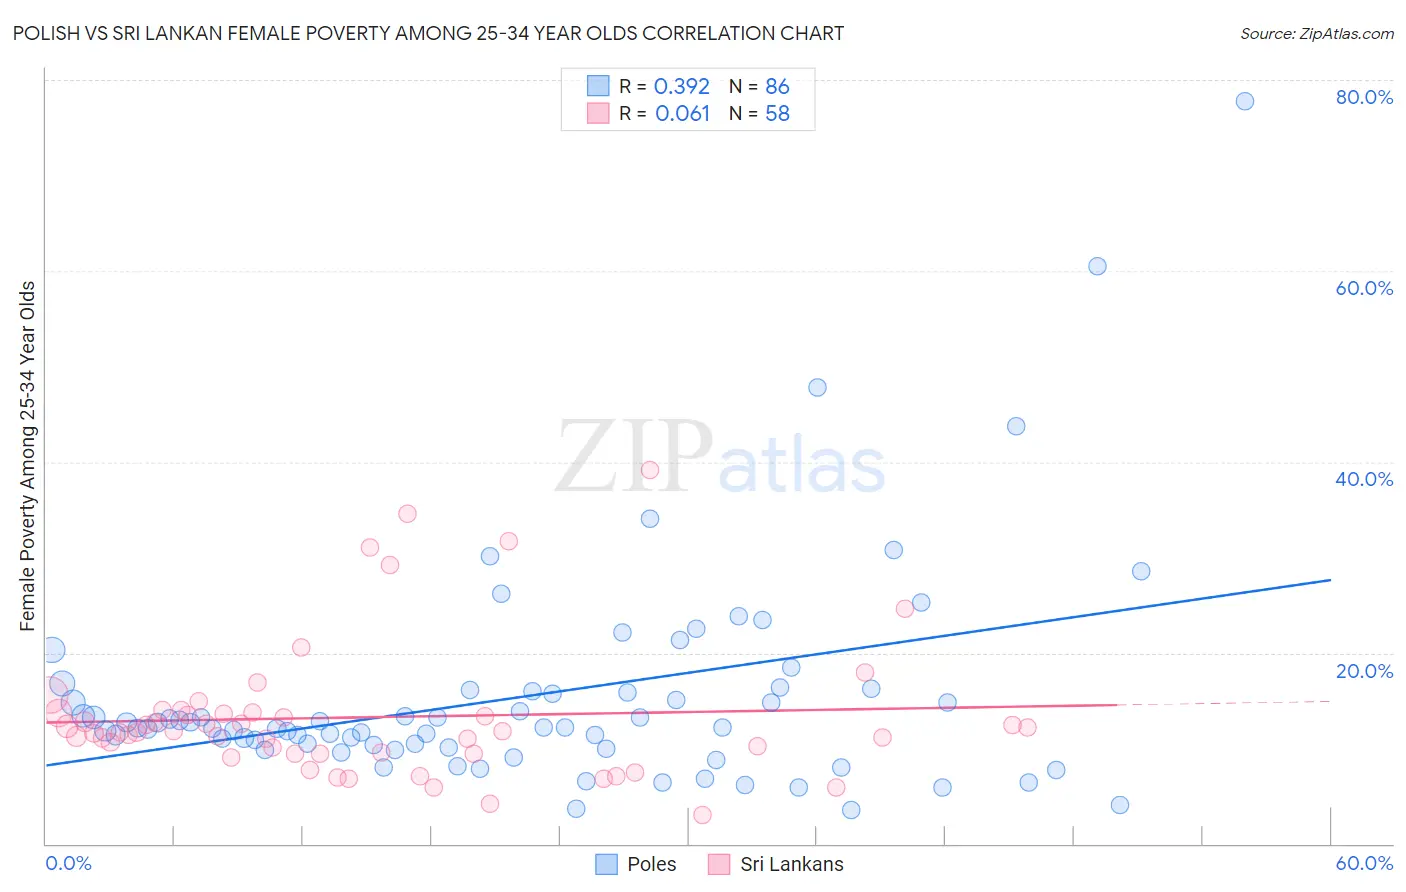 Polish vs Sri Lankan Female Poverty Among 25-34 Year Olds